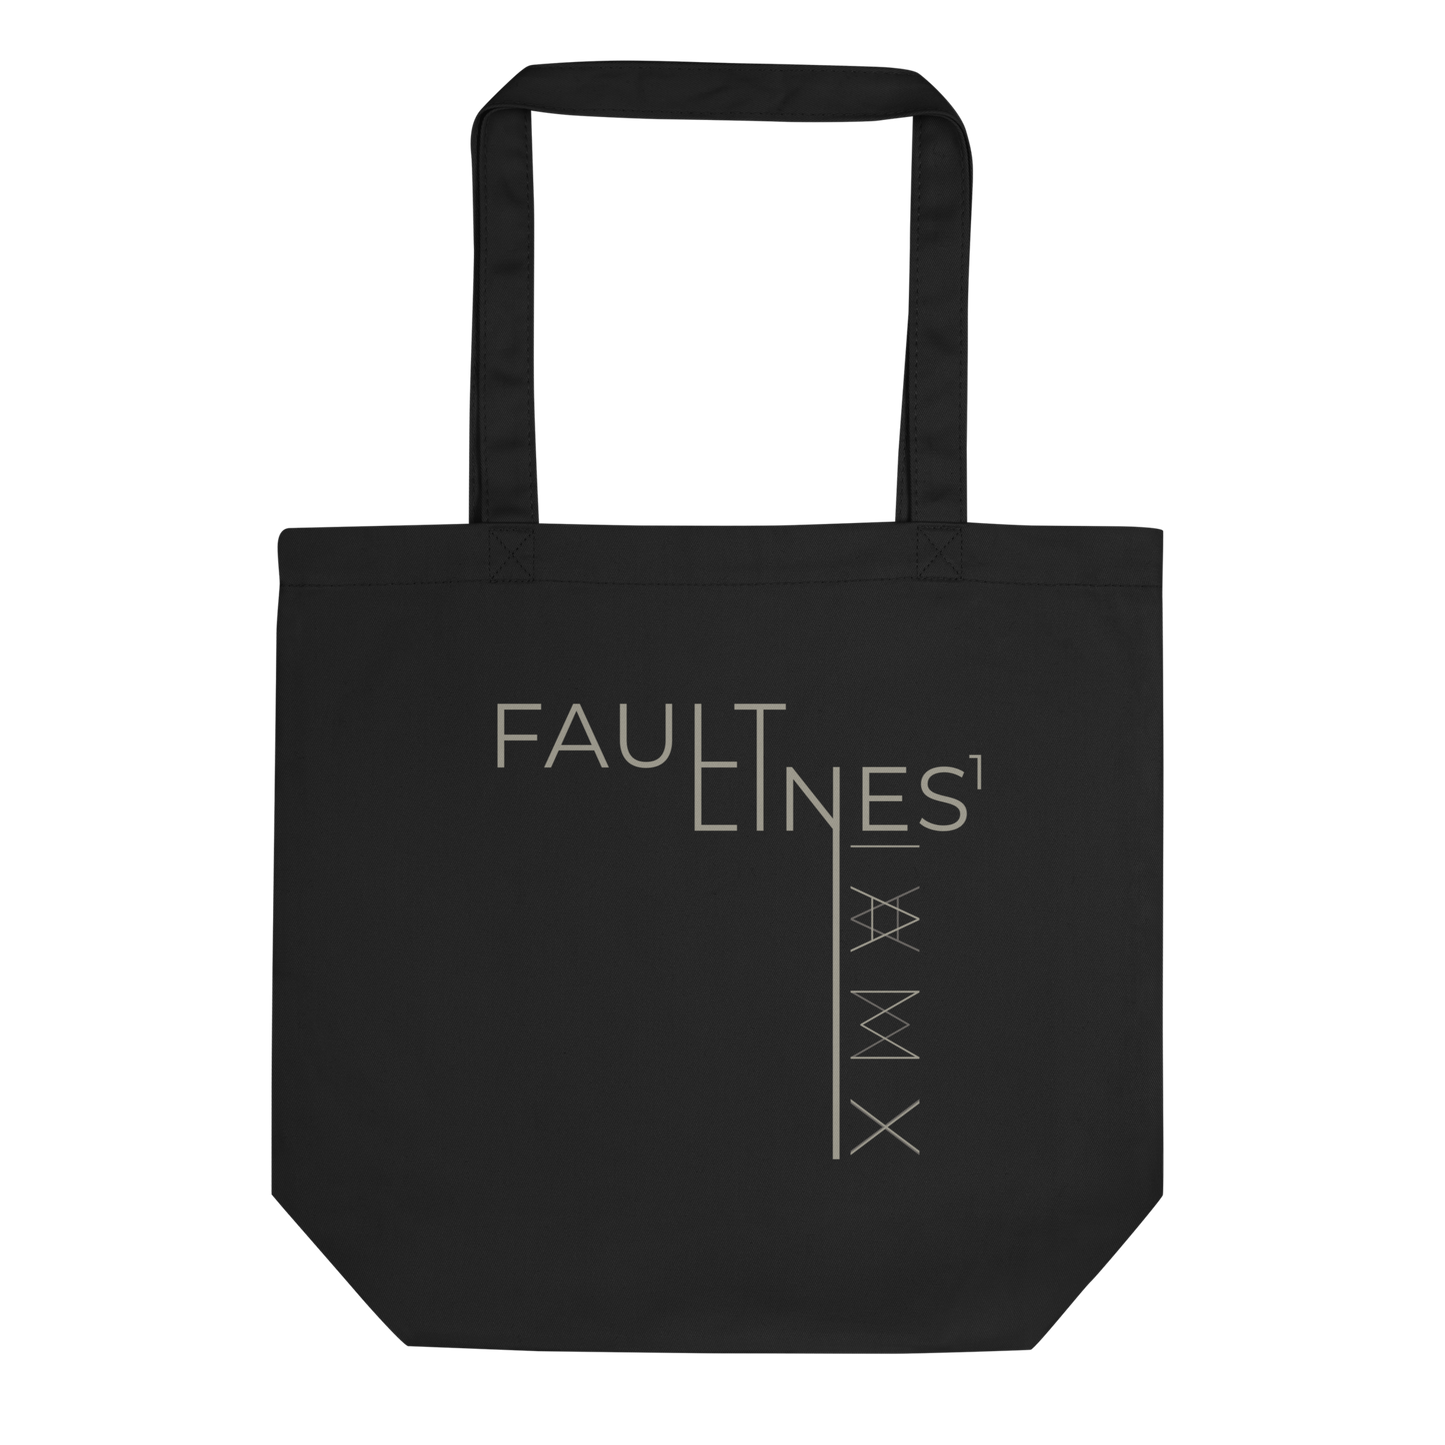 Tote Bag - Fault Lines¹